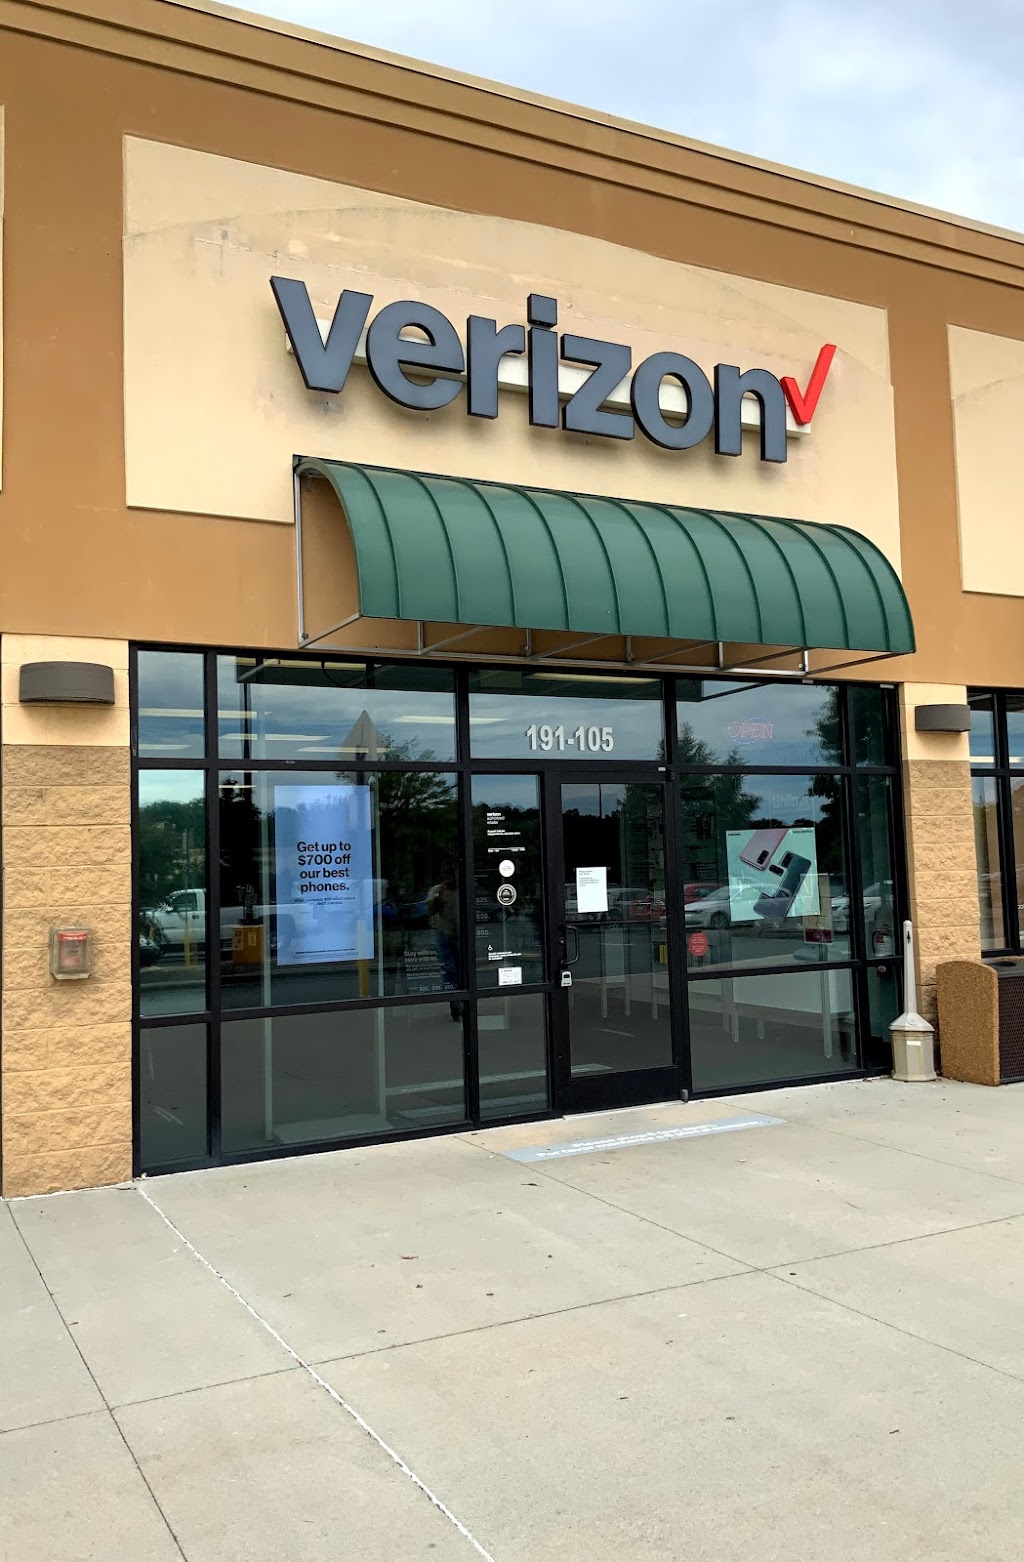 Verizon Authorized Retailer - Russell Cellular | 191 Cooper Creek Dr Ste 105, Mocksville, NC 27028, USA | Phone: (336) 753-1500